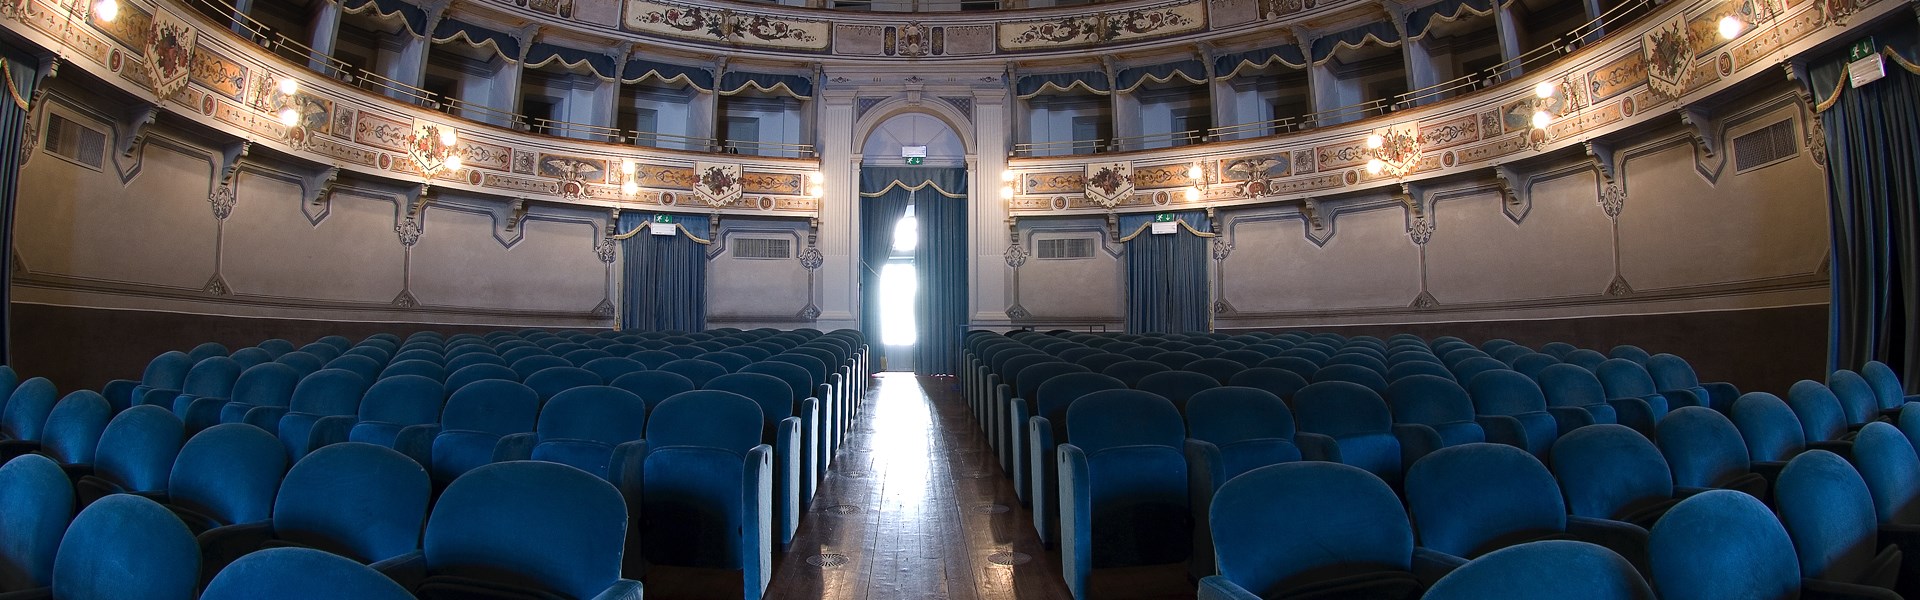 Osimo - Teatro la Nuova Fenice